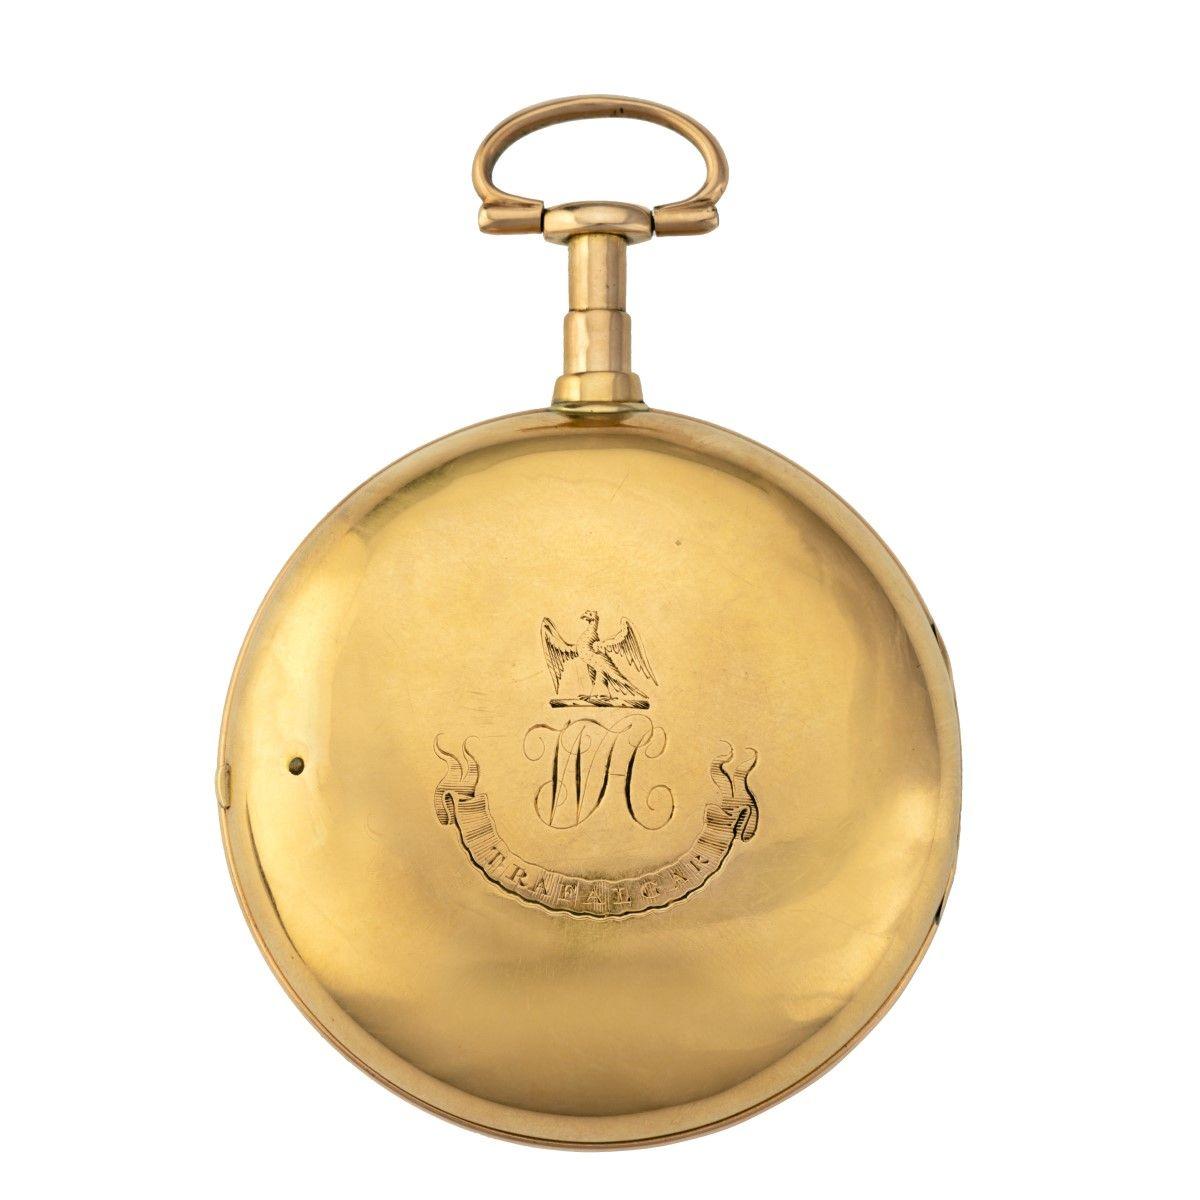 Midshipman Herringham’s gold Trafalgar watch